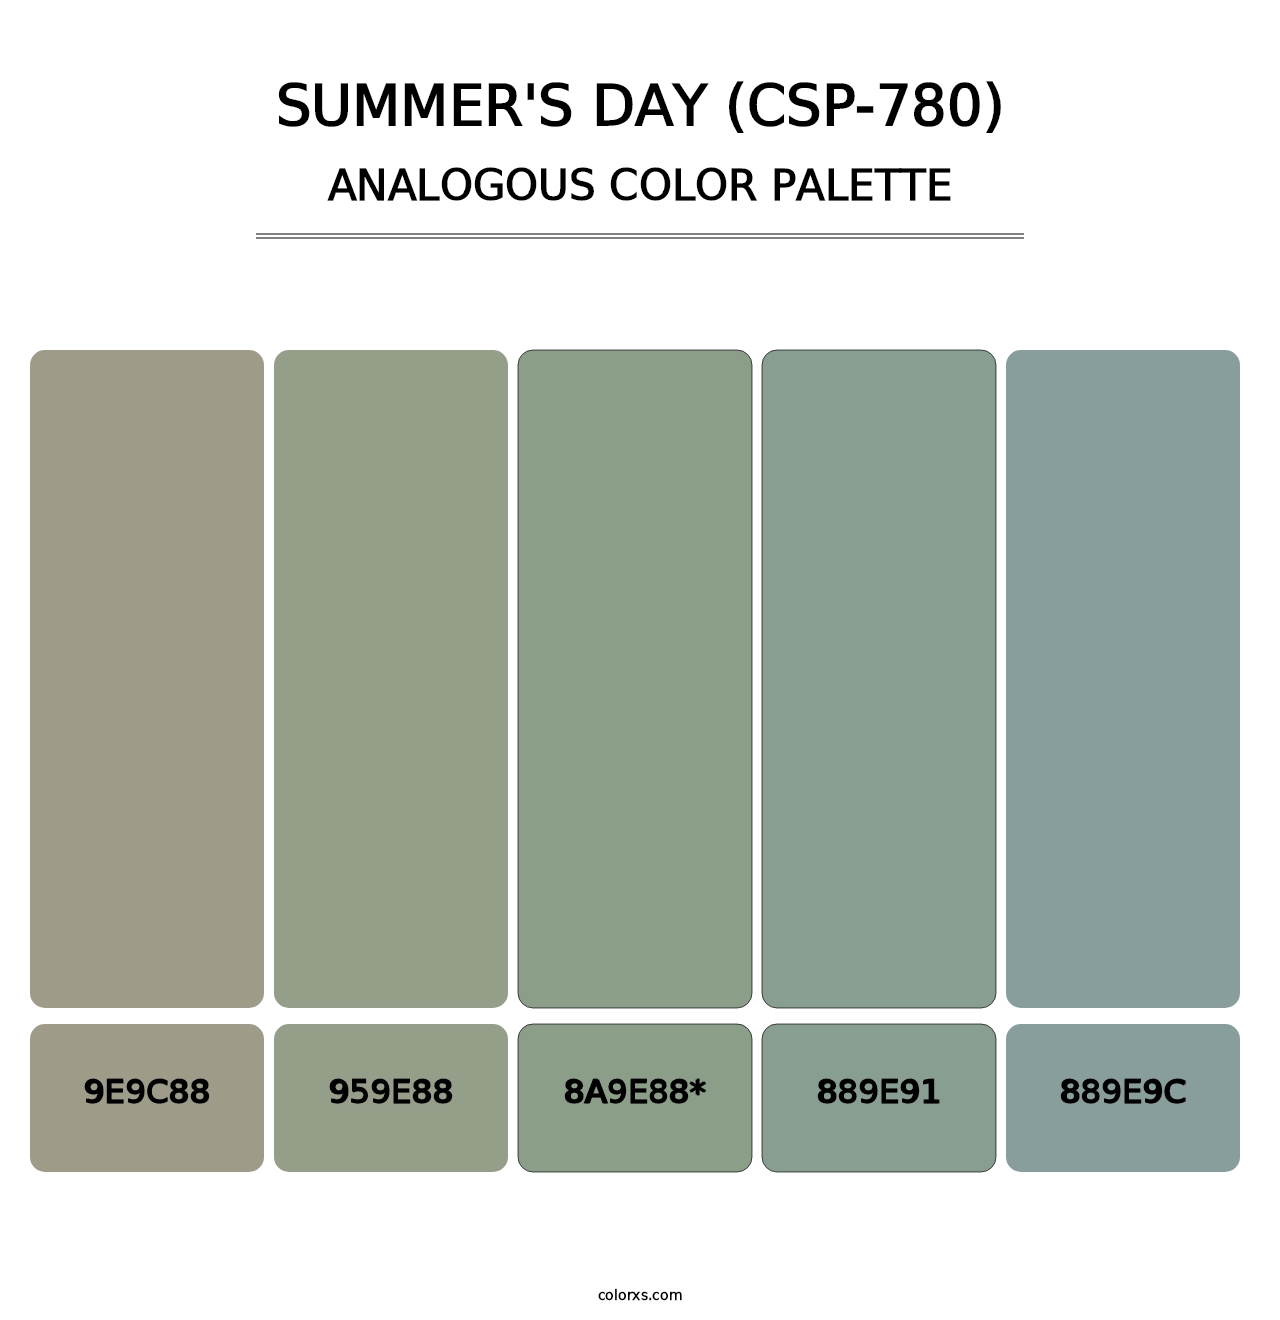 Summer's Day (CSP-780) - Analogous Color Palette